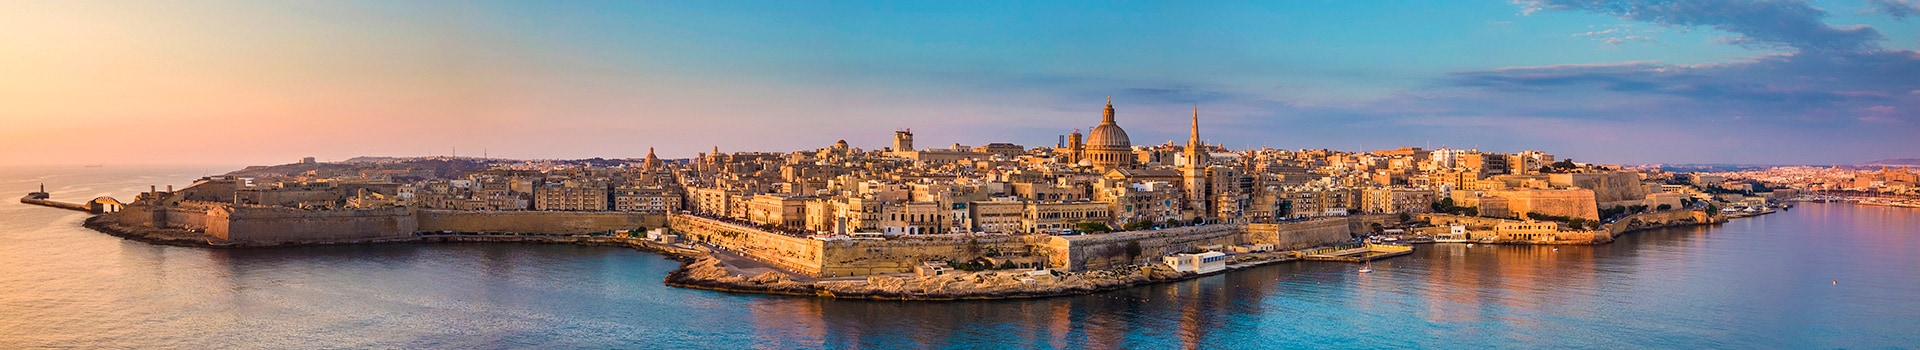 Trieste - Malta